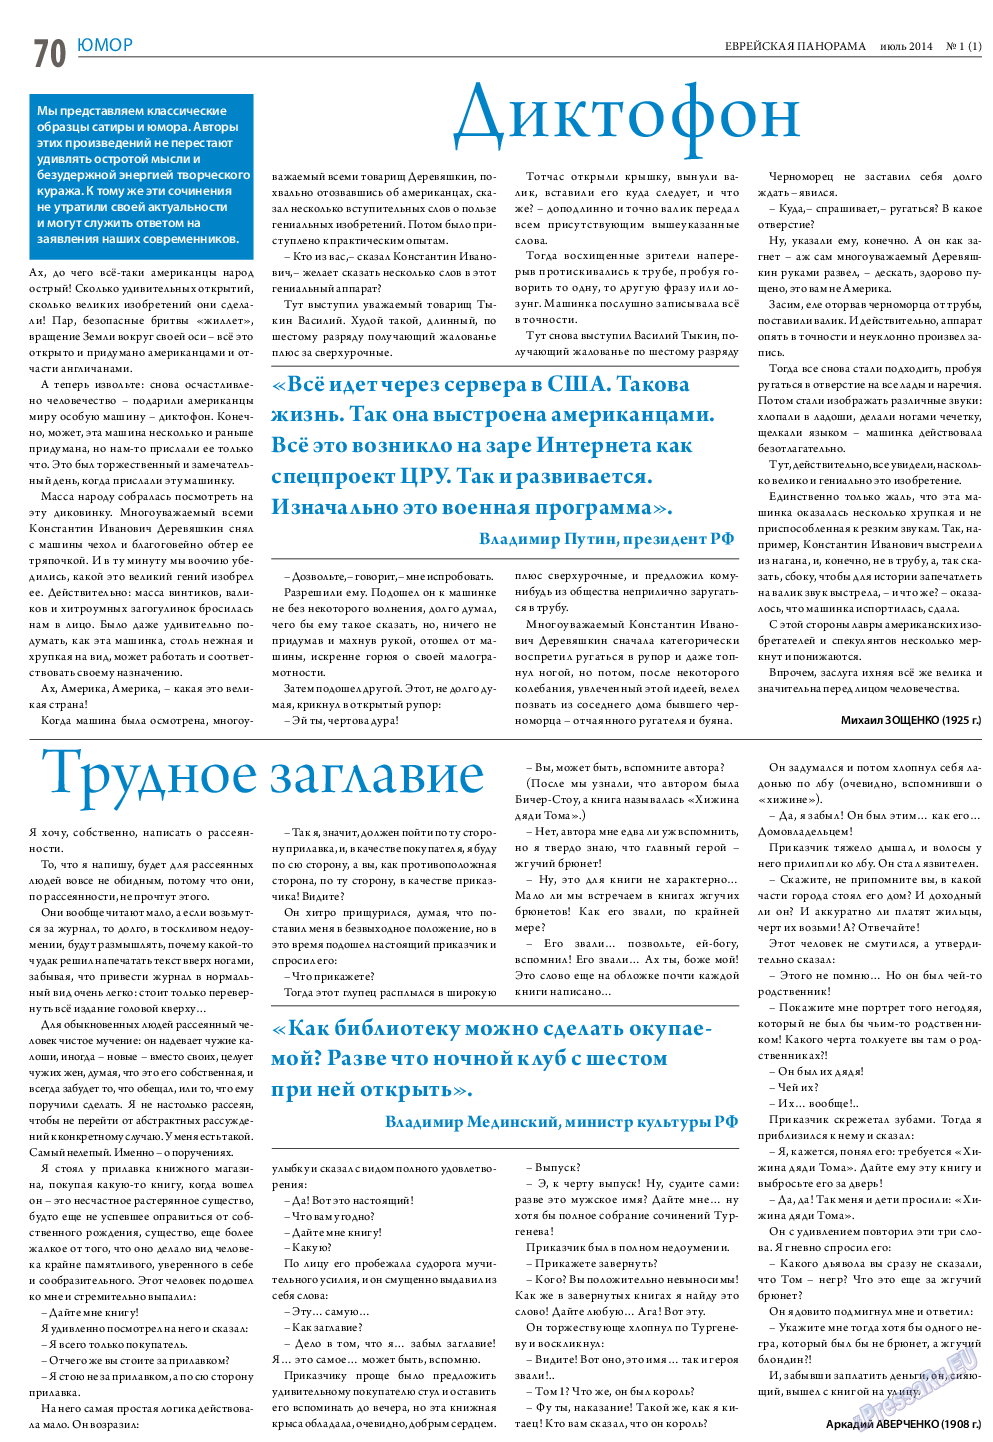 Еврейская панорама, газета. 2014 №1 стр.70